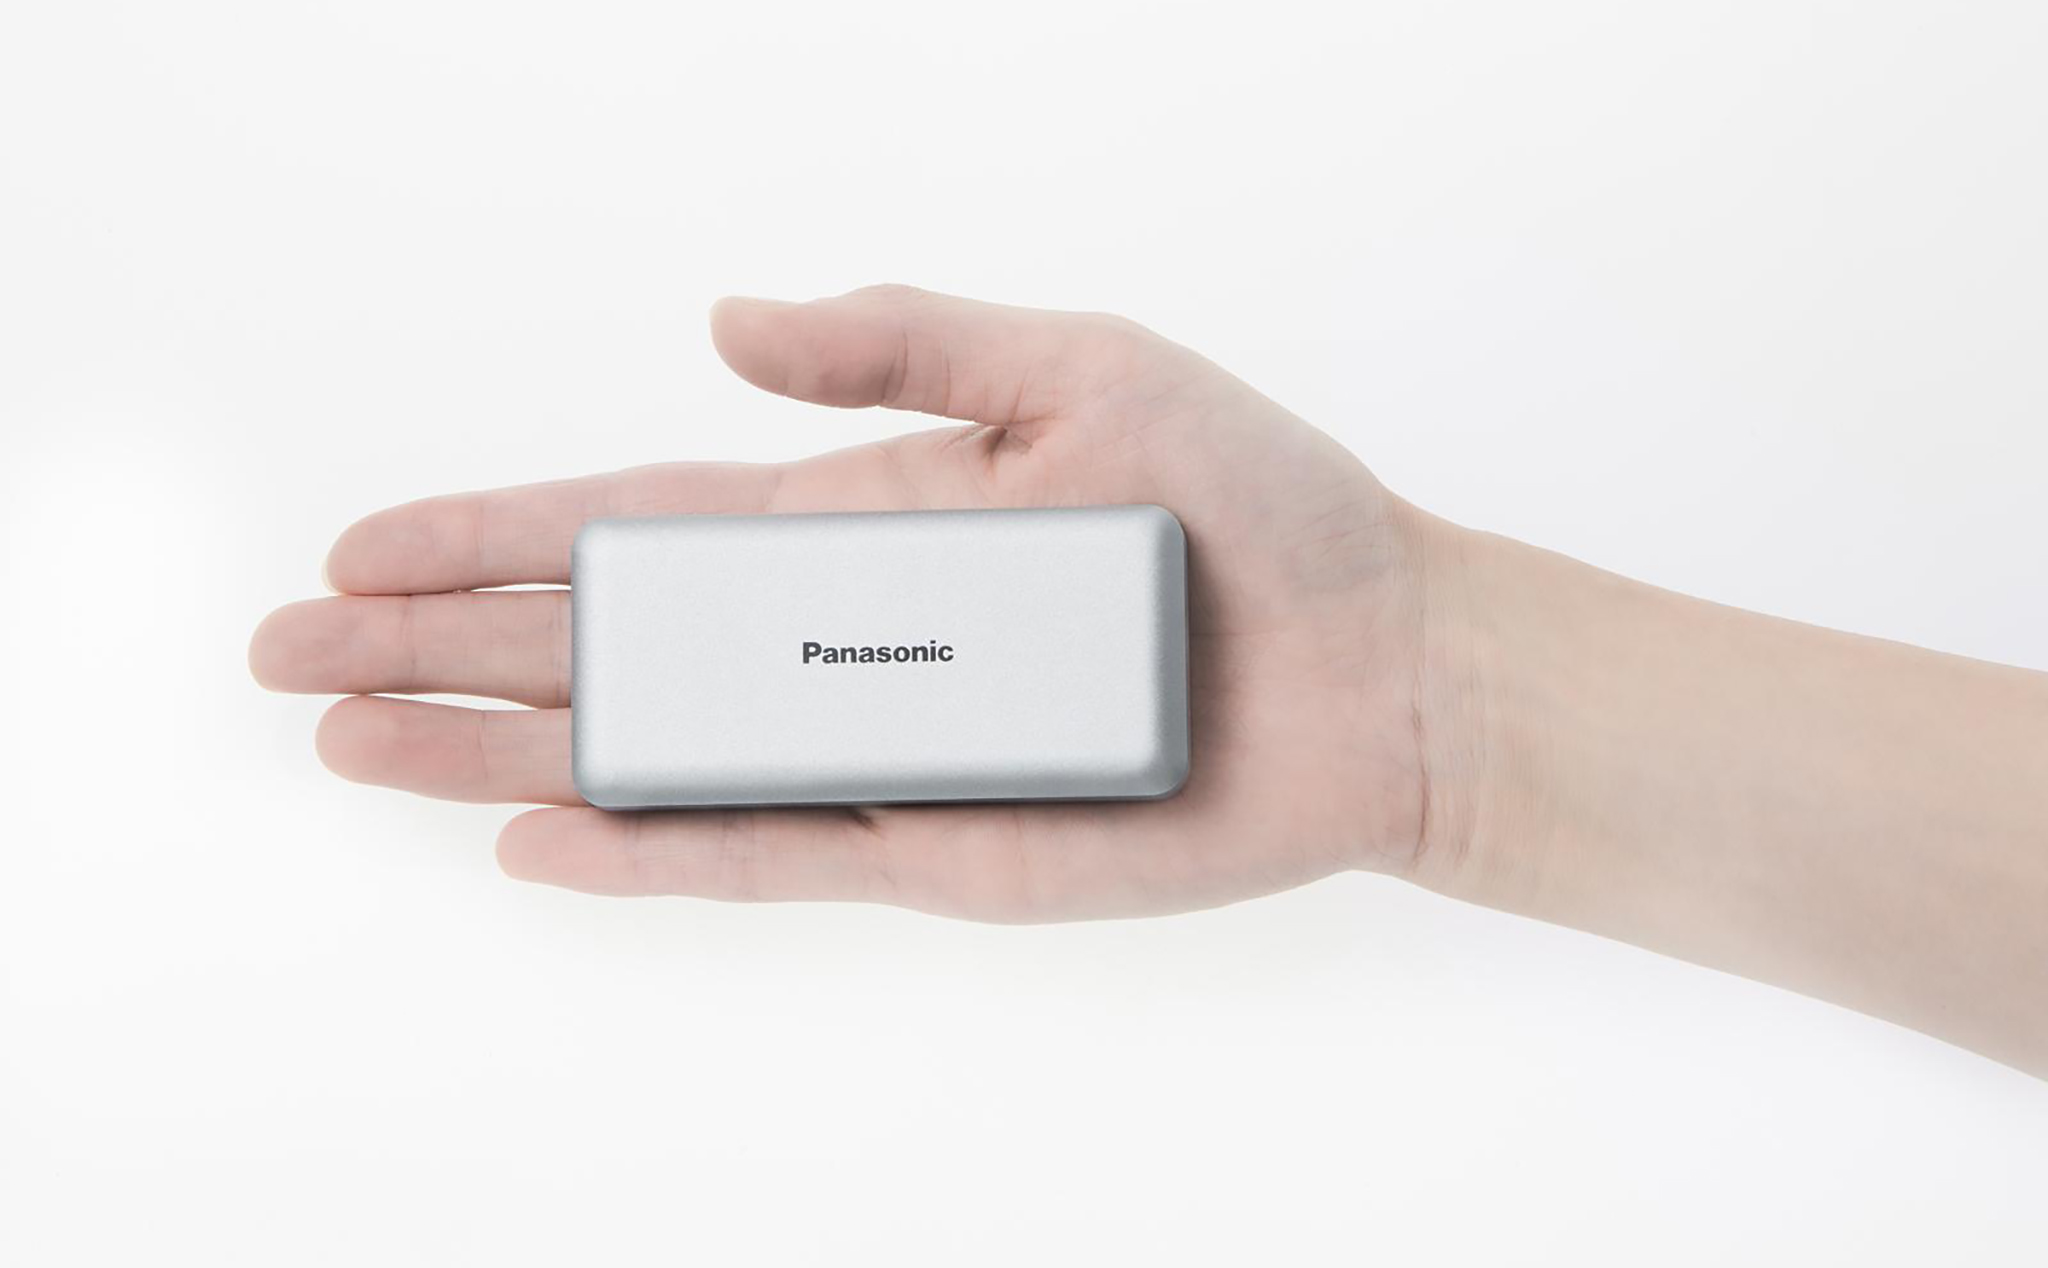 Panasonic Compact Lightweiht Portable SSD (1).jpg